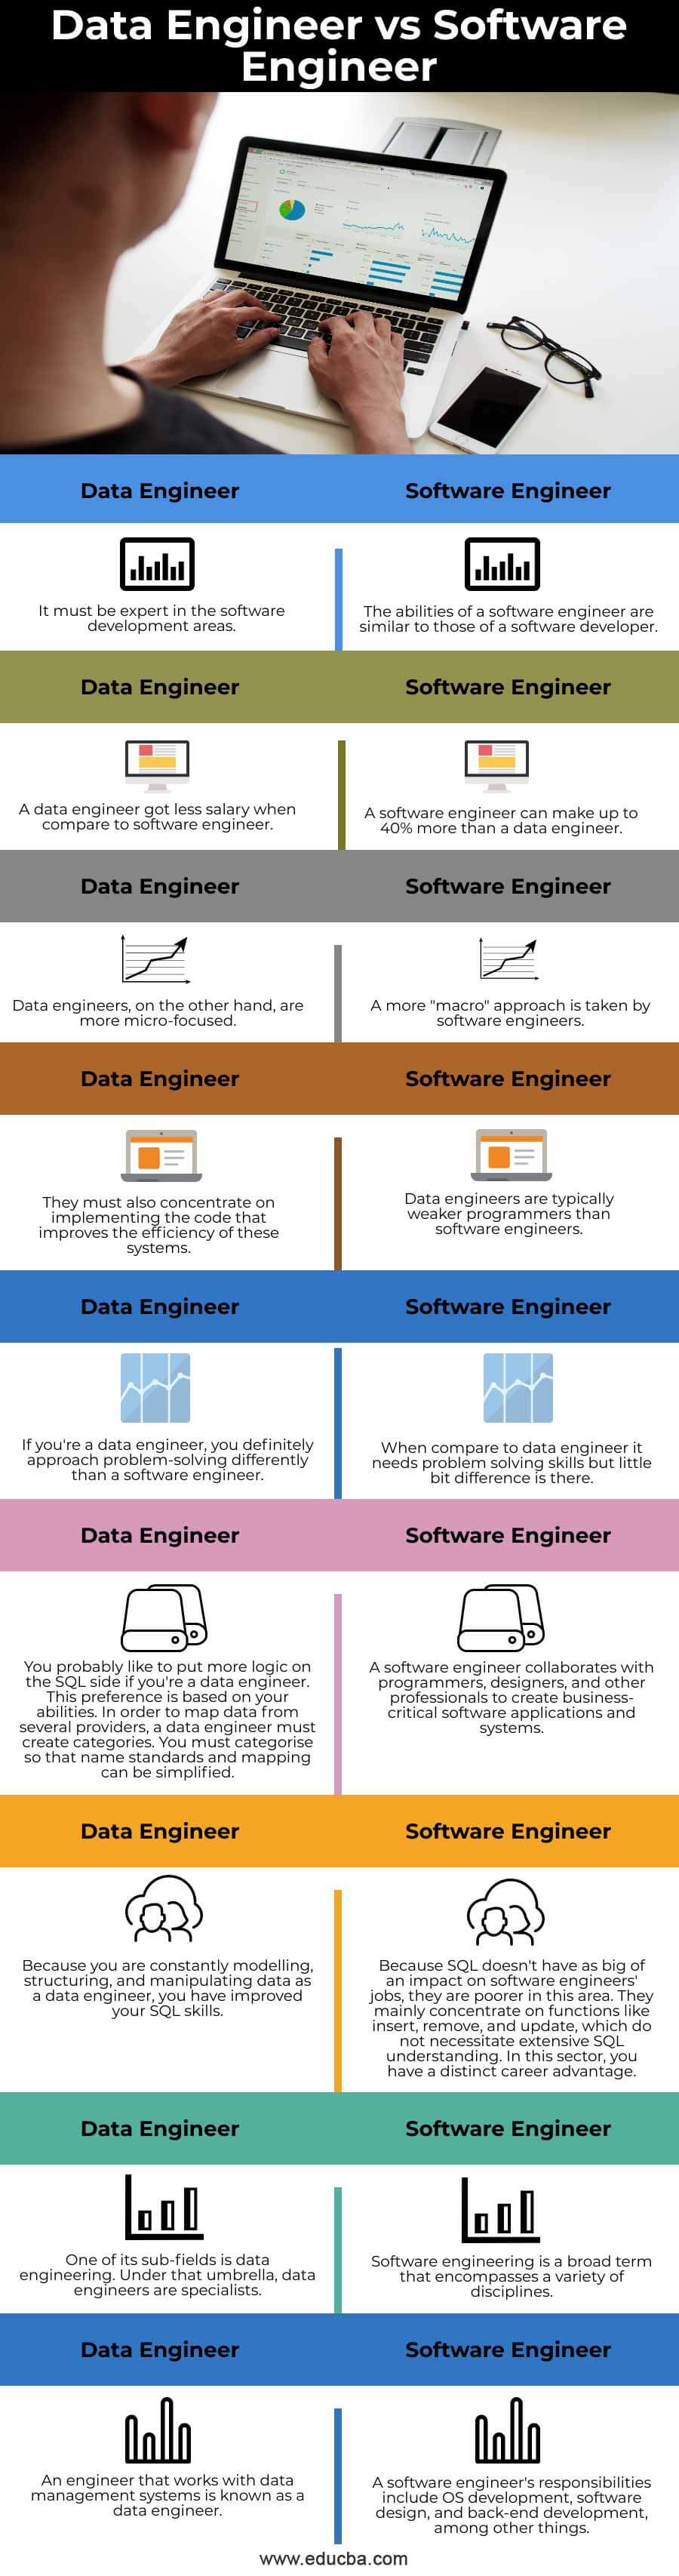 Data-Engineer-vs-Software-Engineer-info